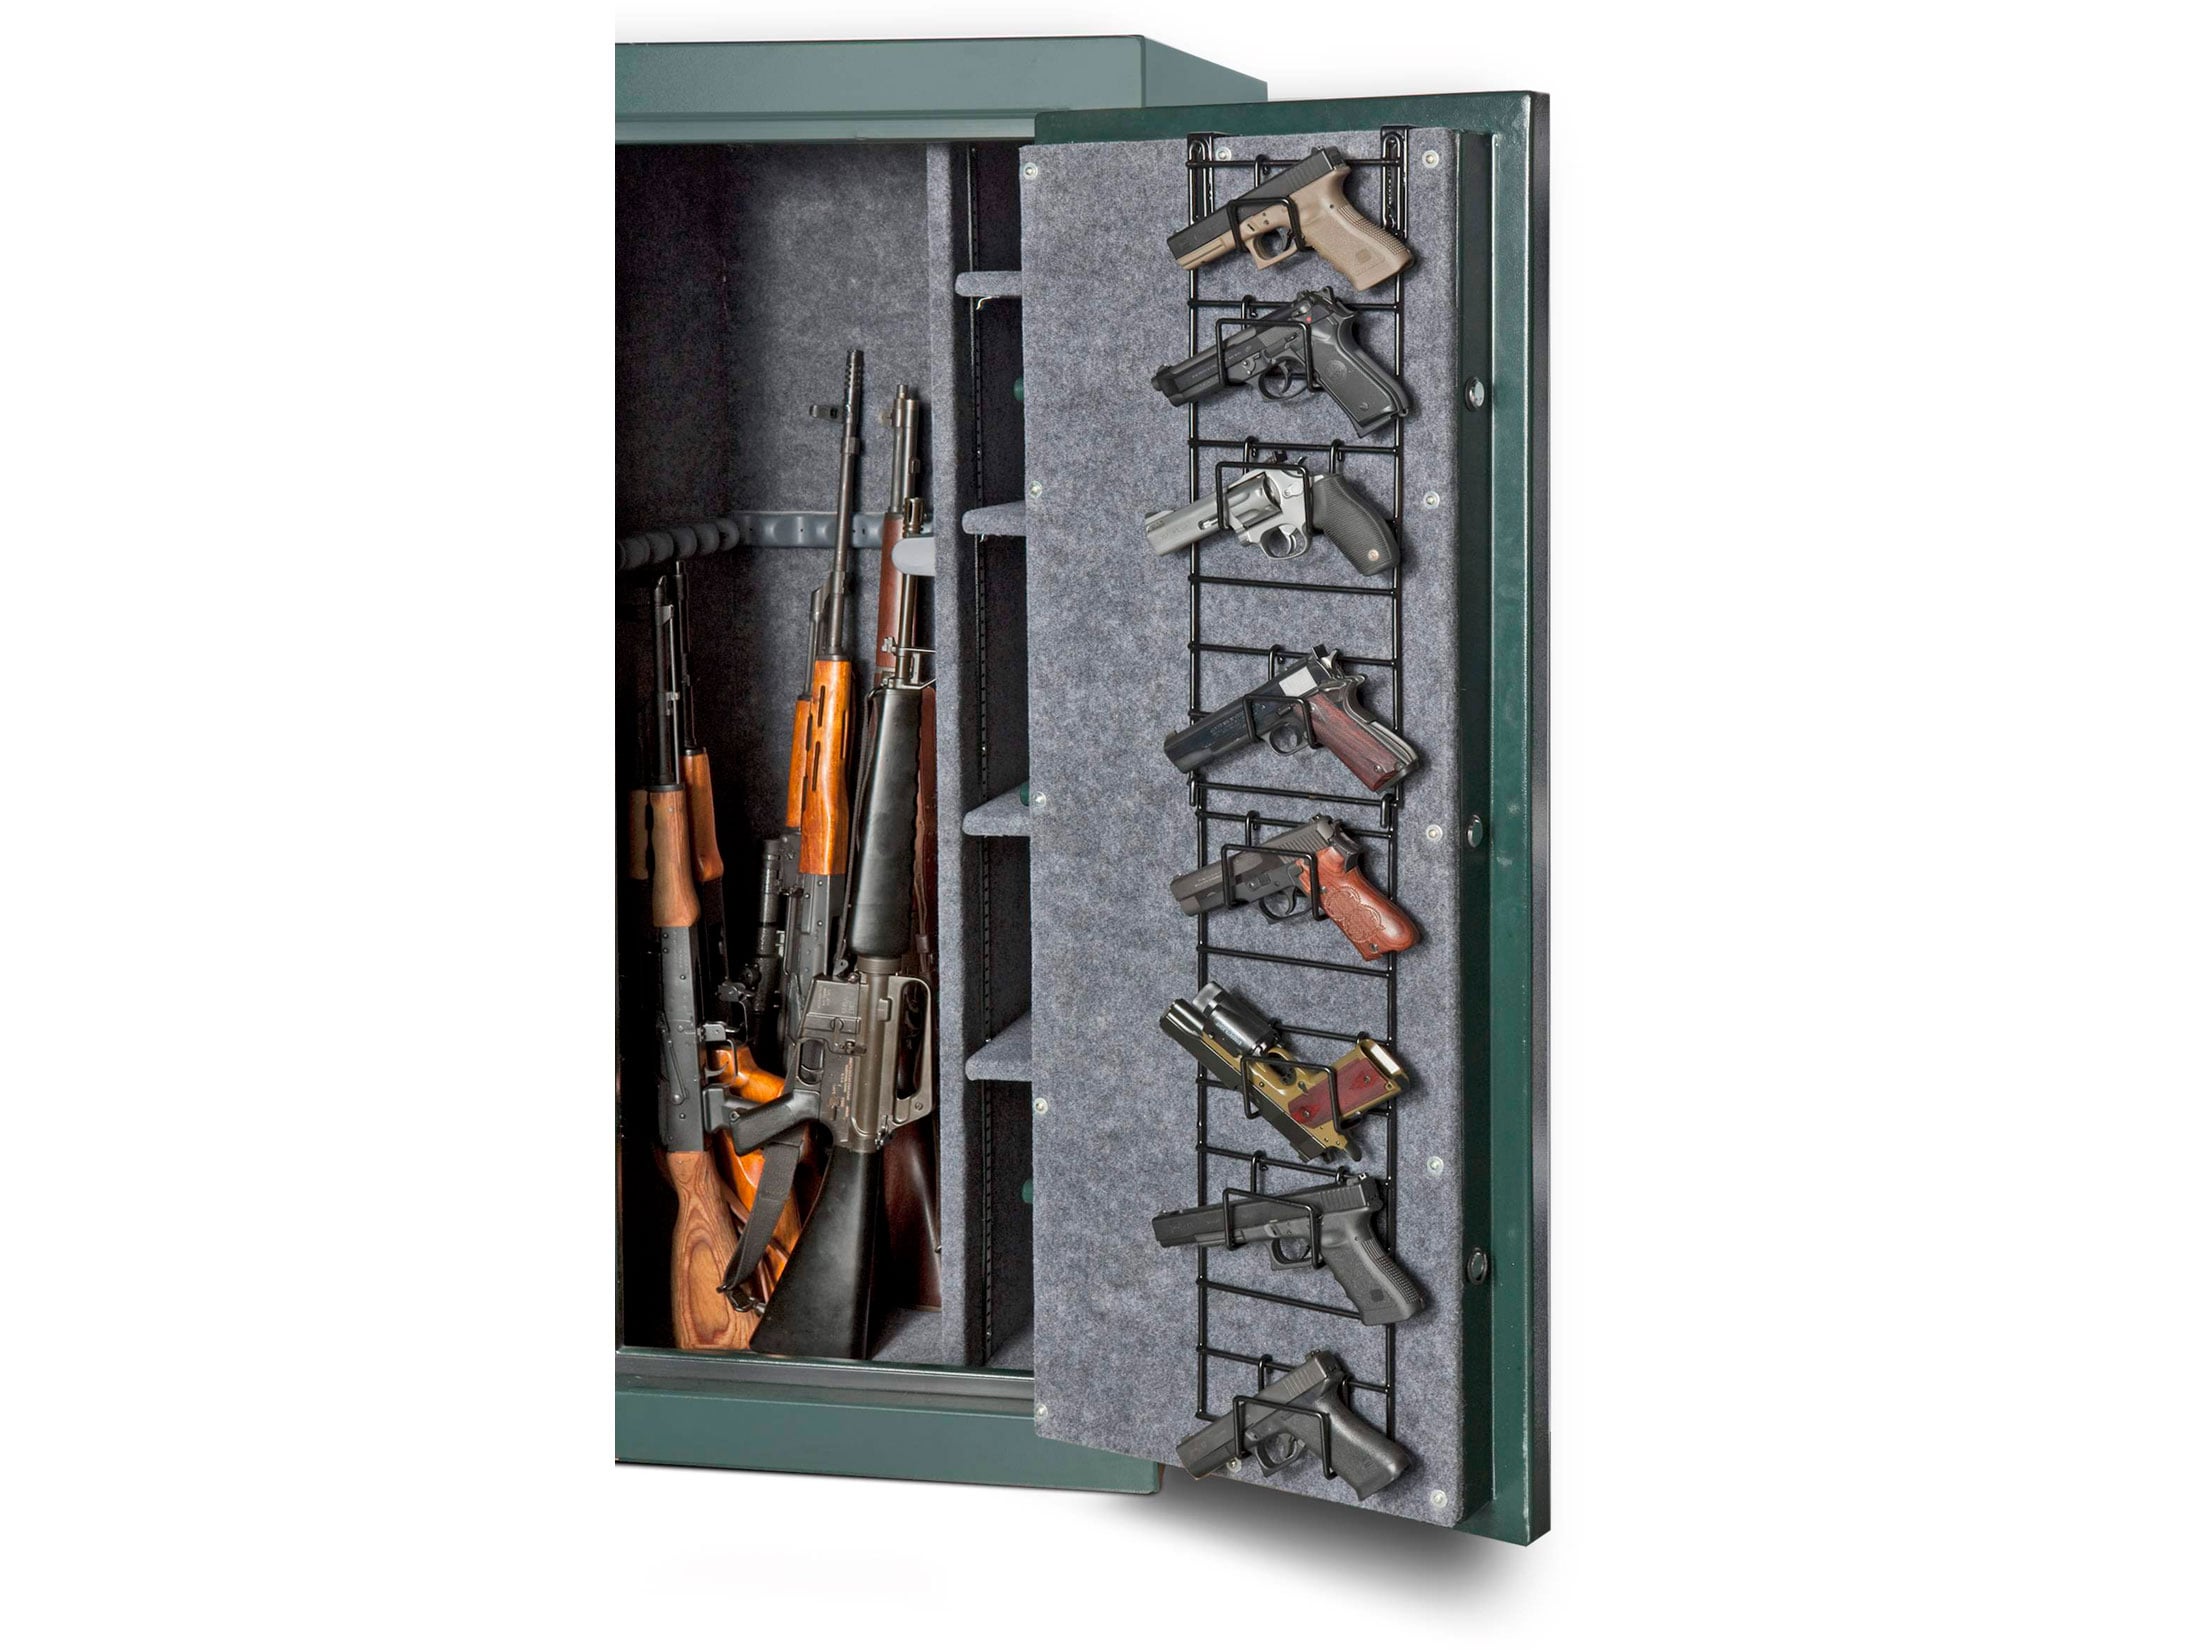 Handgun Rack For Inside Safe Holds 8 Pistols Gun Storage Organizer Holder Black 